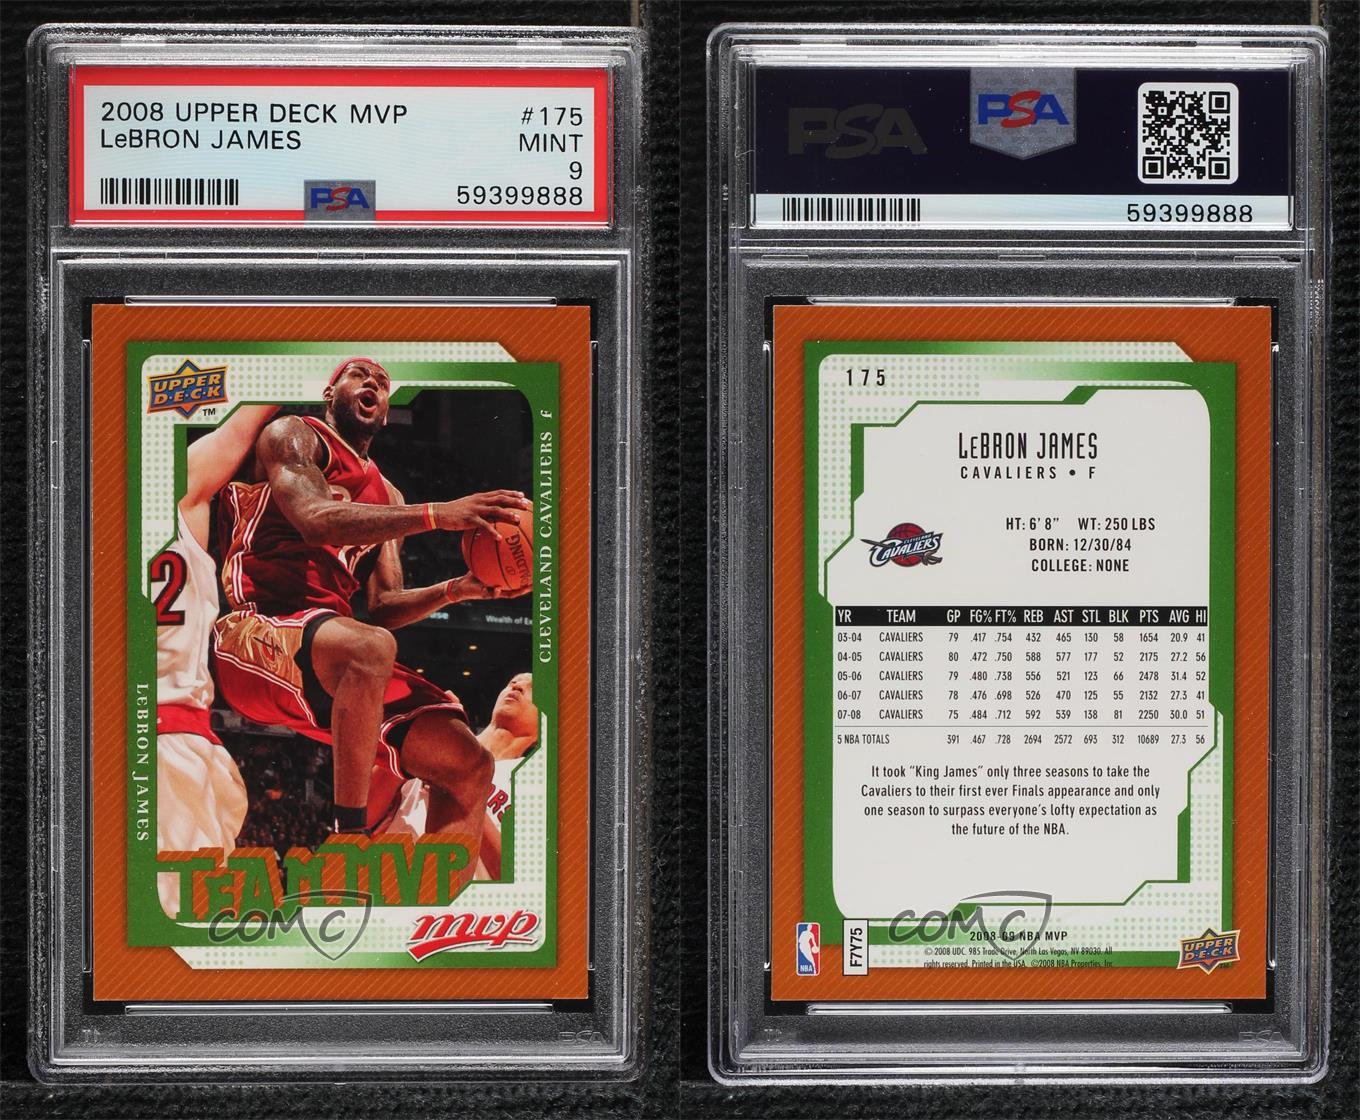 2008-09 Upper Deck MVP LeBron James #175 PSA 9 MINT | eBay